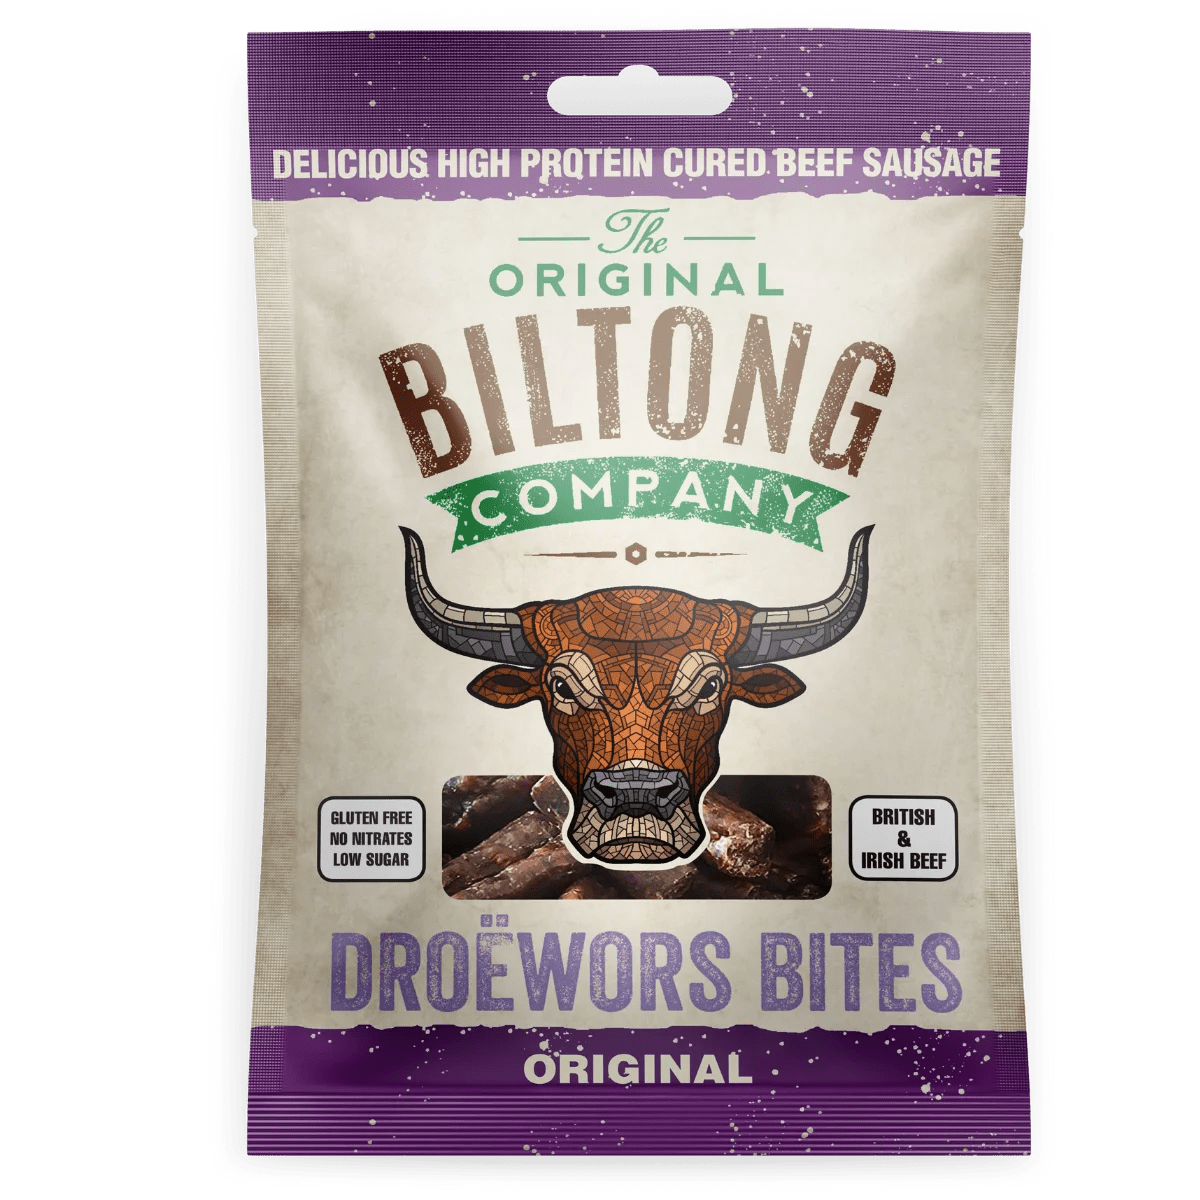 Original Droëwors Bites - The Original Biltong Company